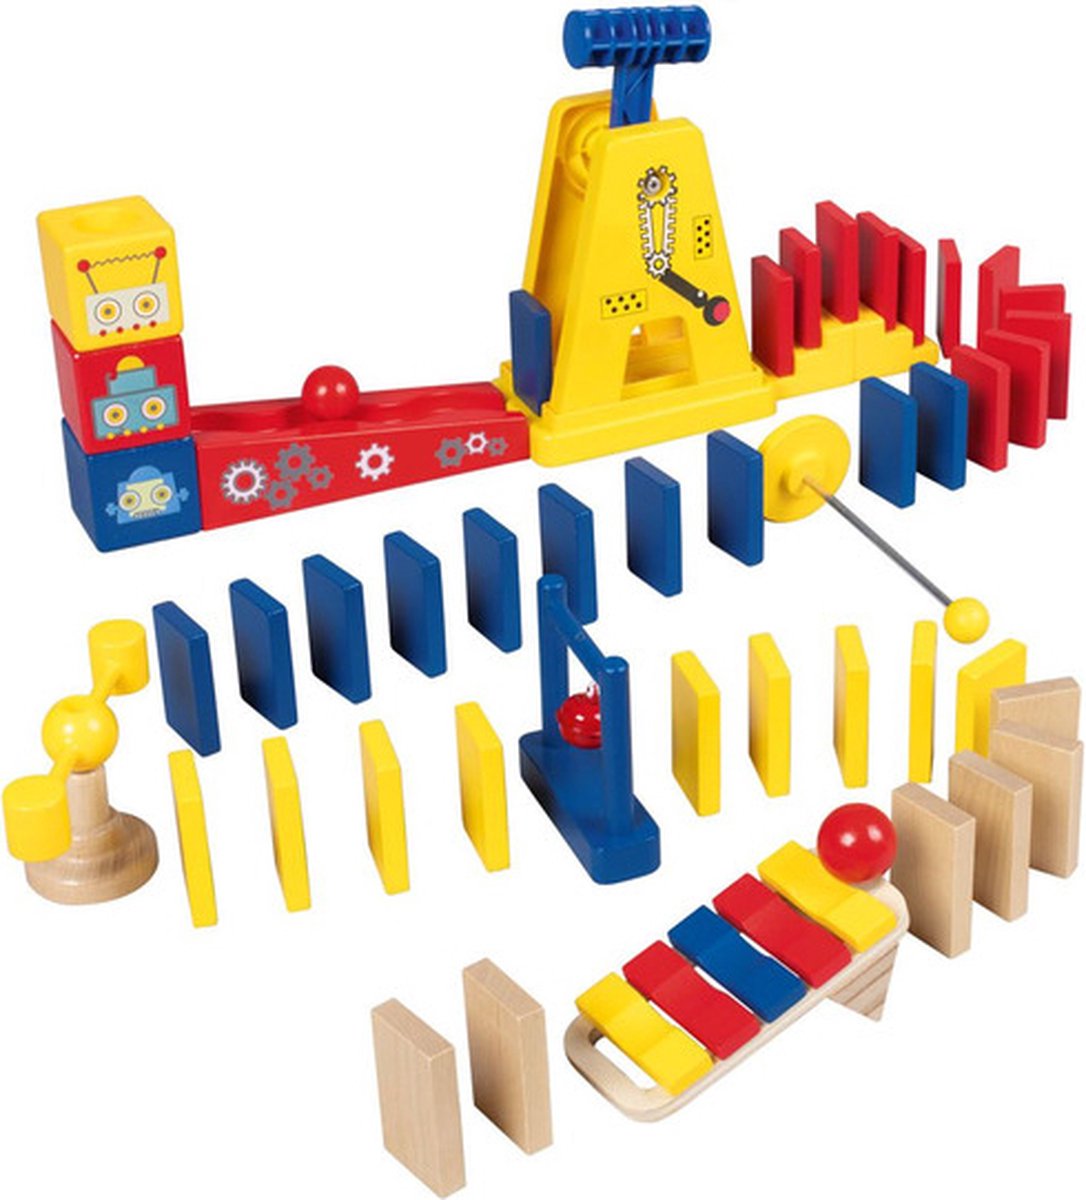 Jouets en bois - Dominos robots - 54 pièces - Playtive Junior - 3